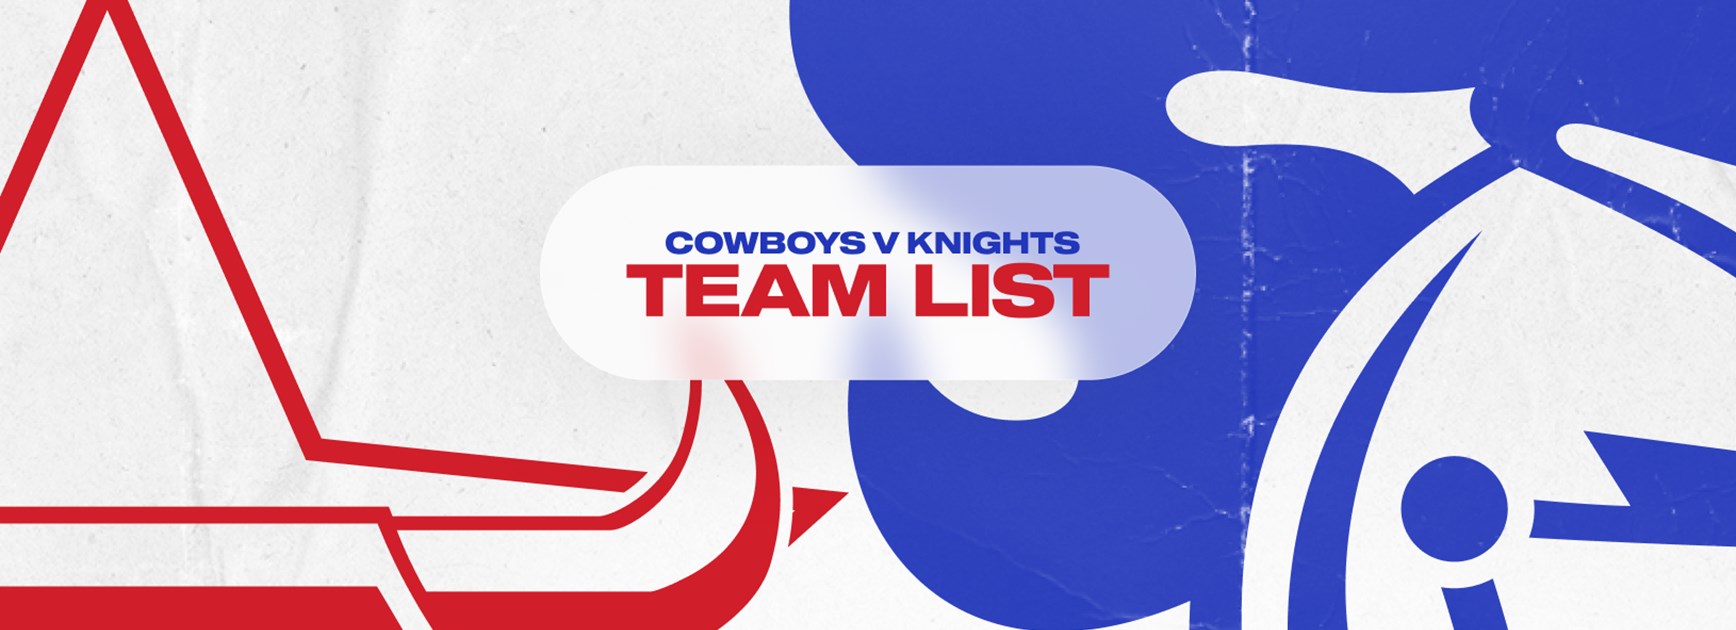 Cowboys v Knights Round 2 NRL team list